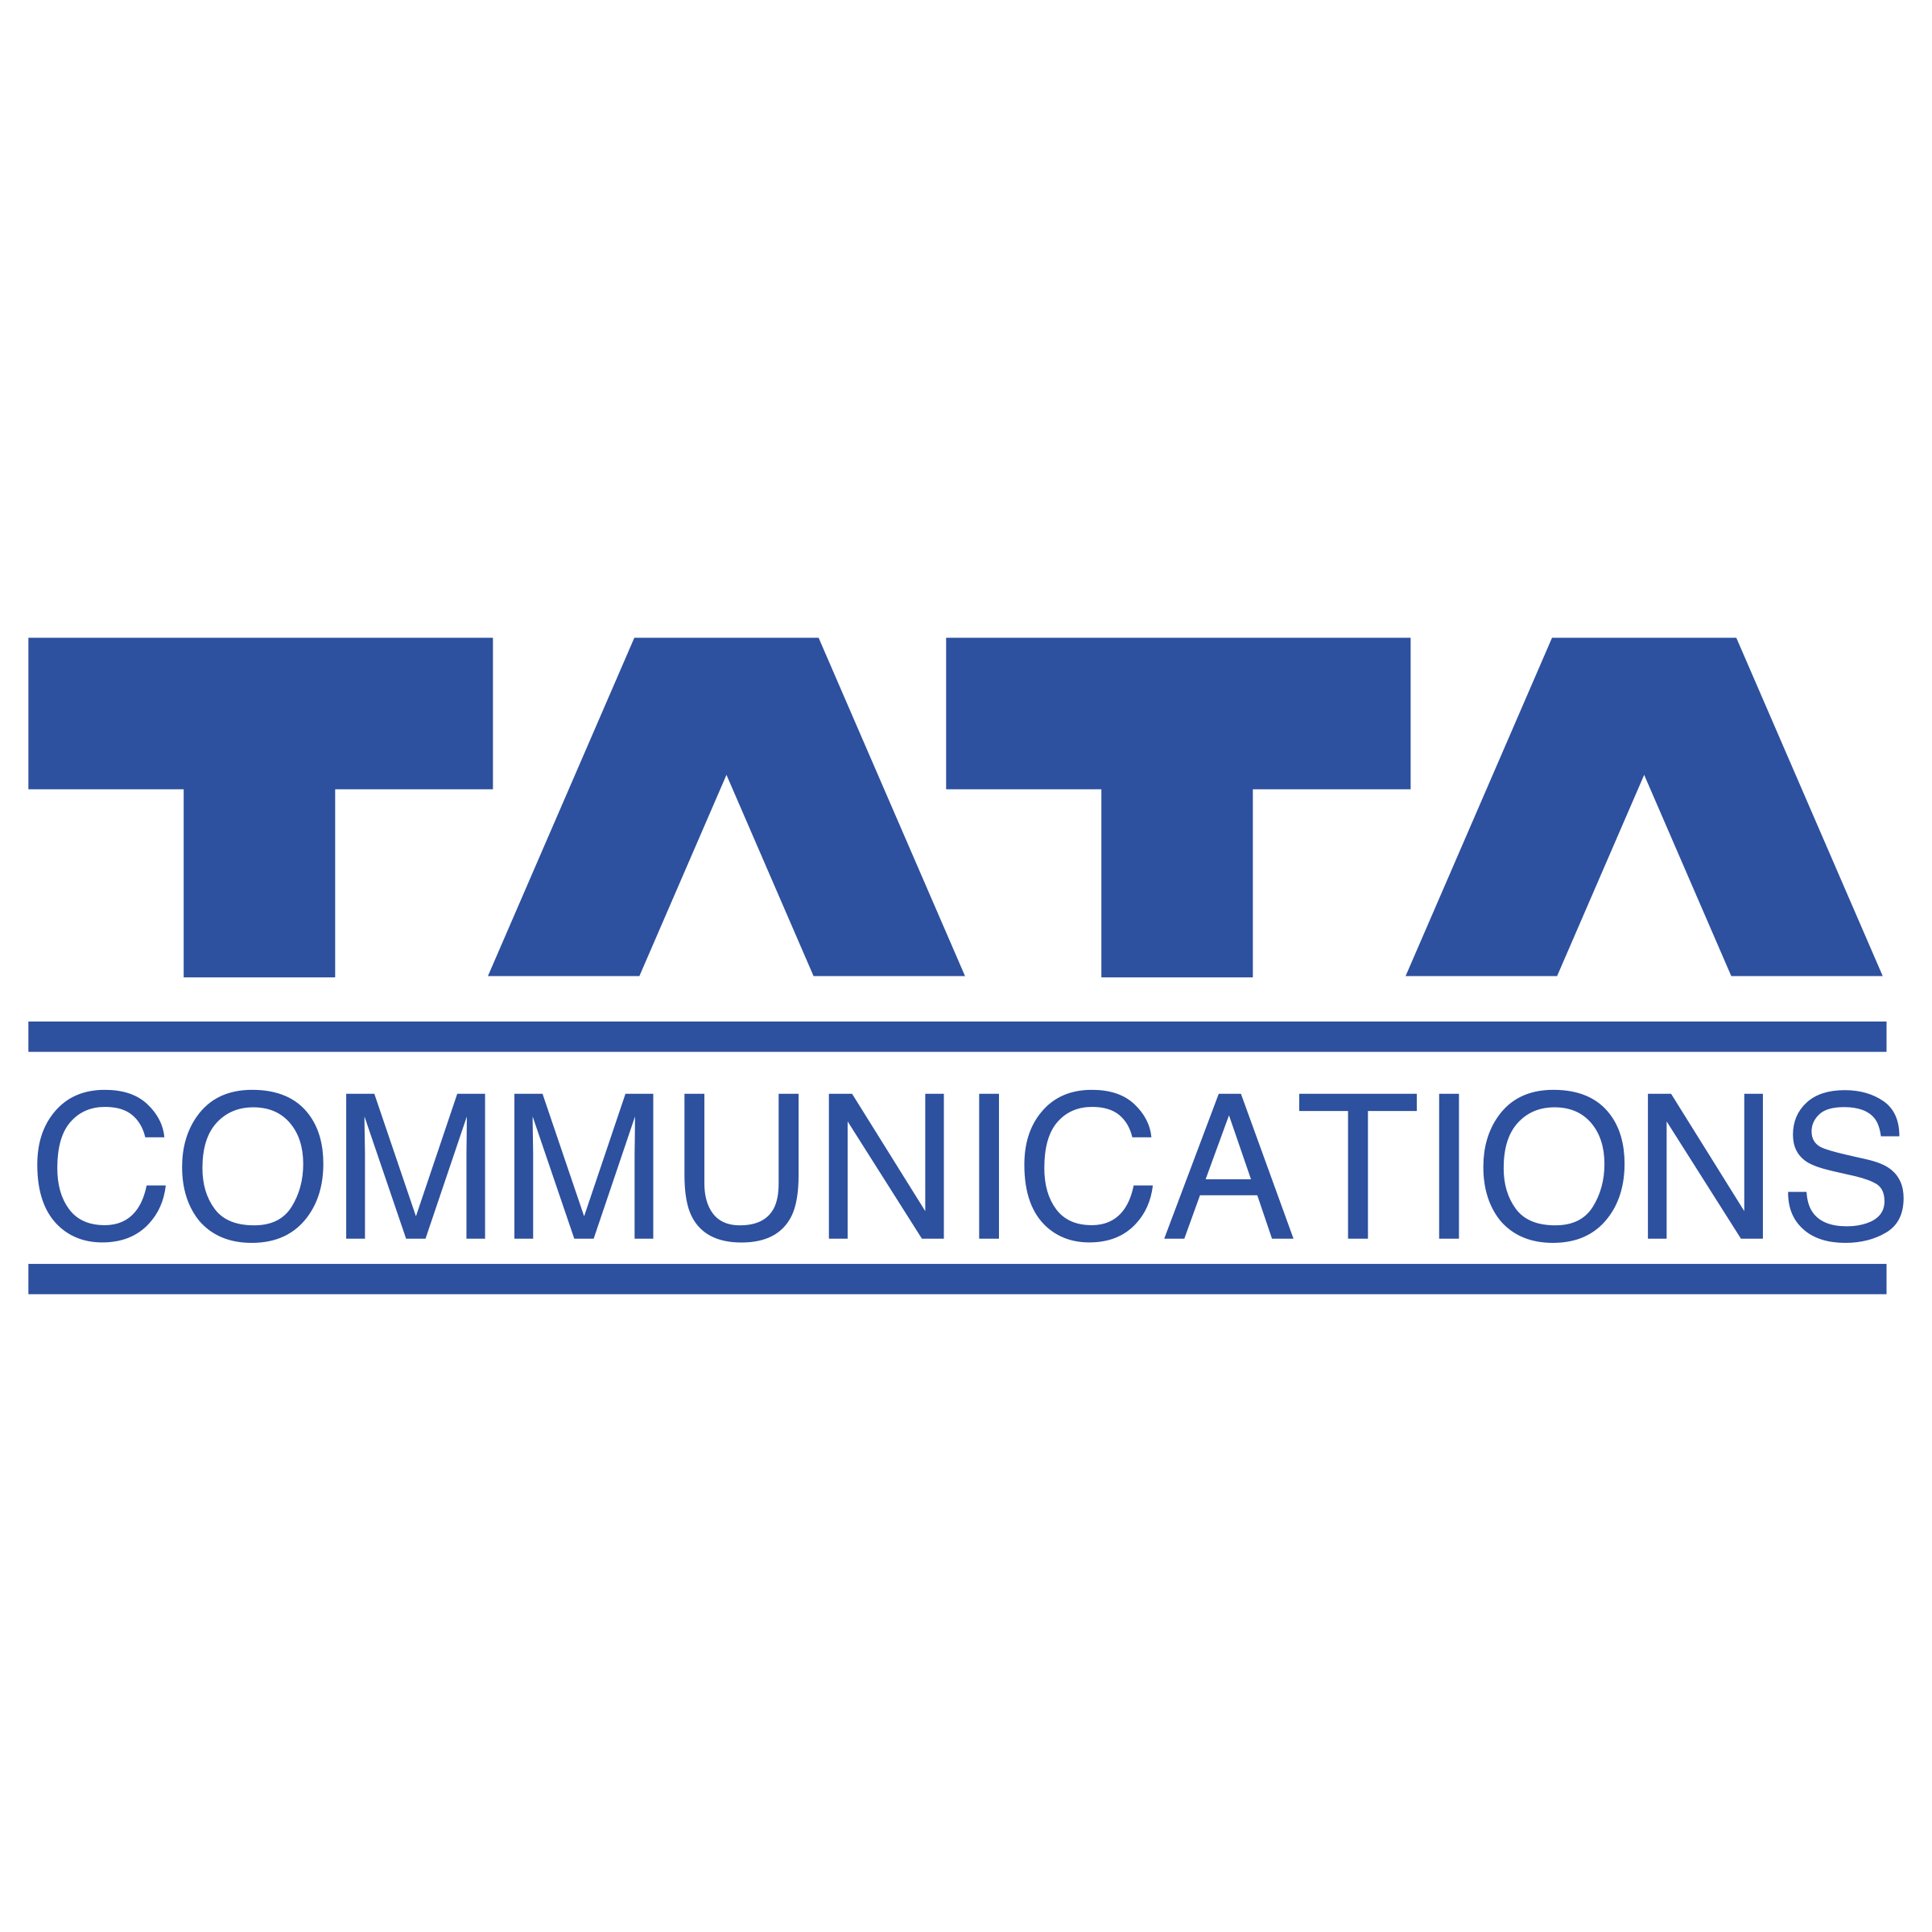 Tata Communications Logo - Tata Communications Logo PNG Transparent & SVG Vector - Freebie Supply